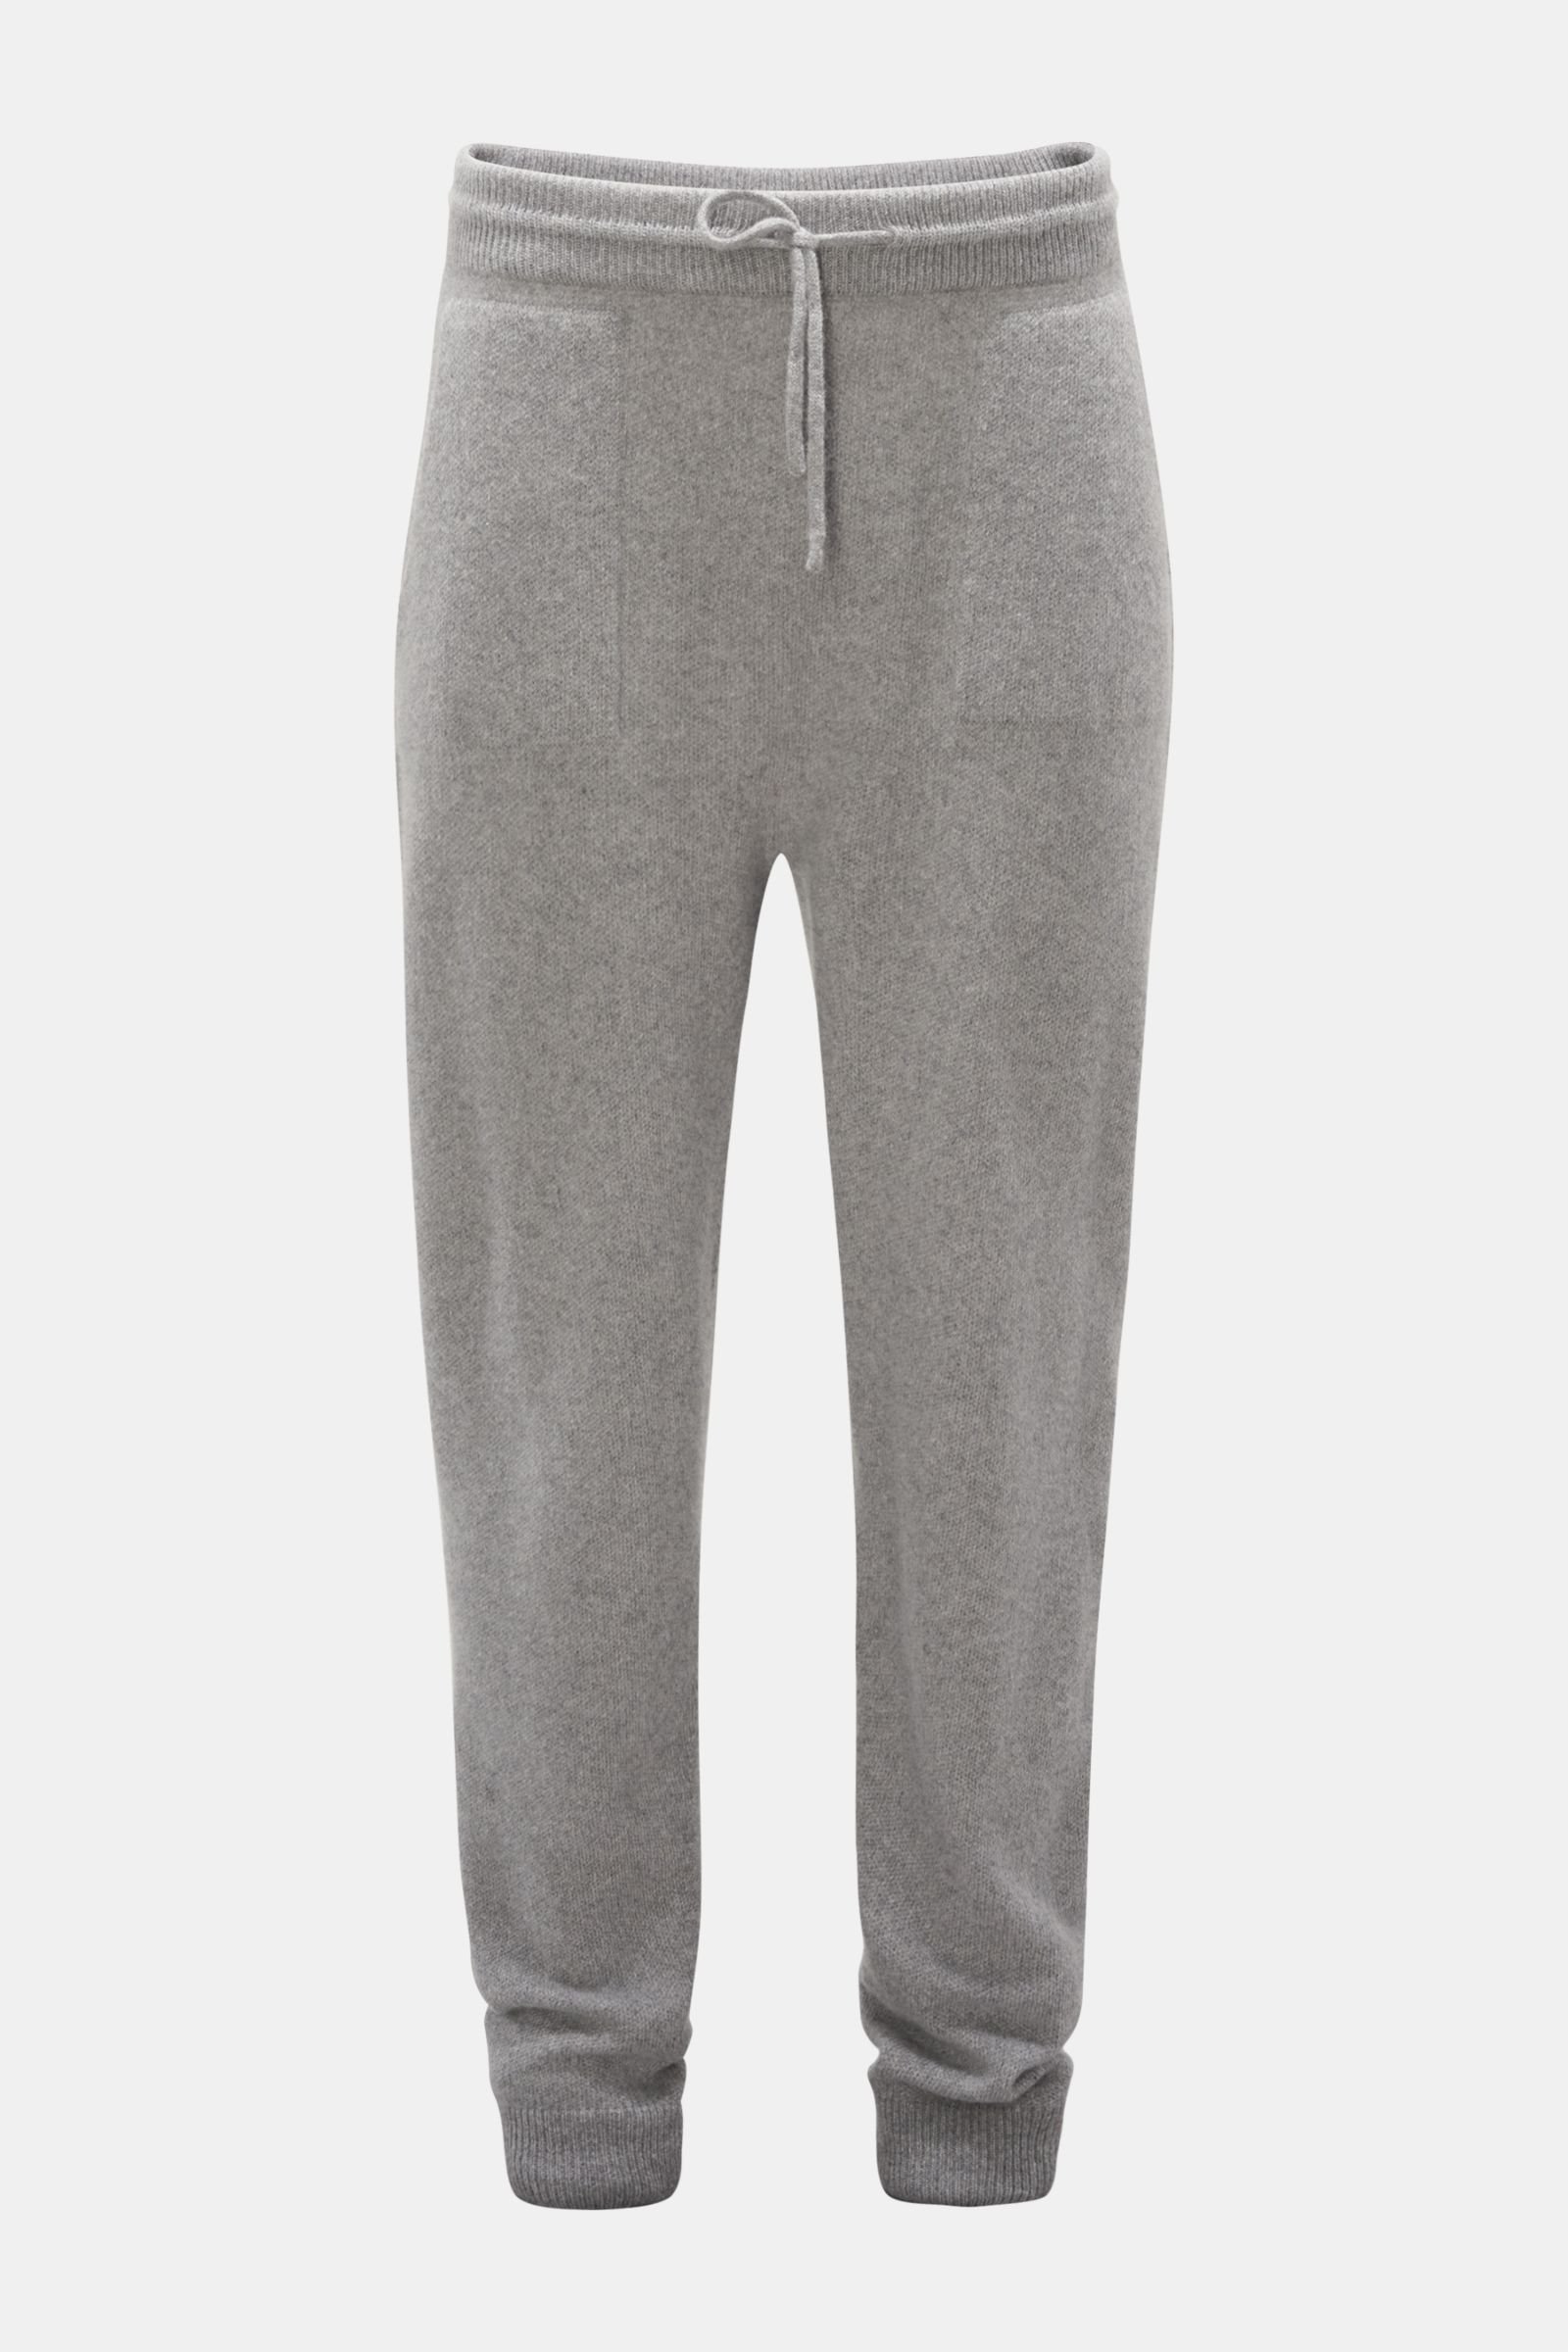 04651/ A TRIP IN A BAG cashmere jogger pants 'The cashmere Pant